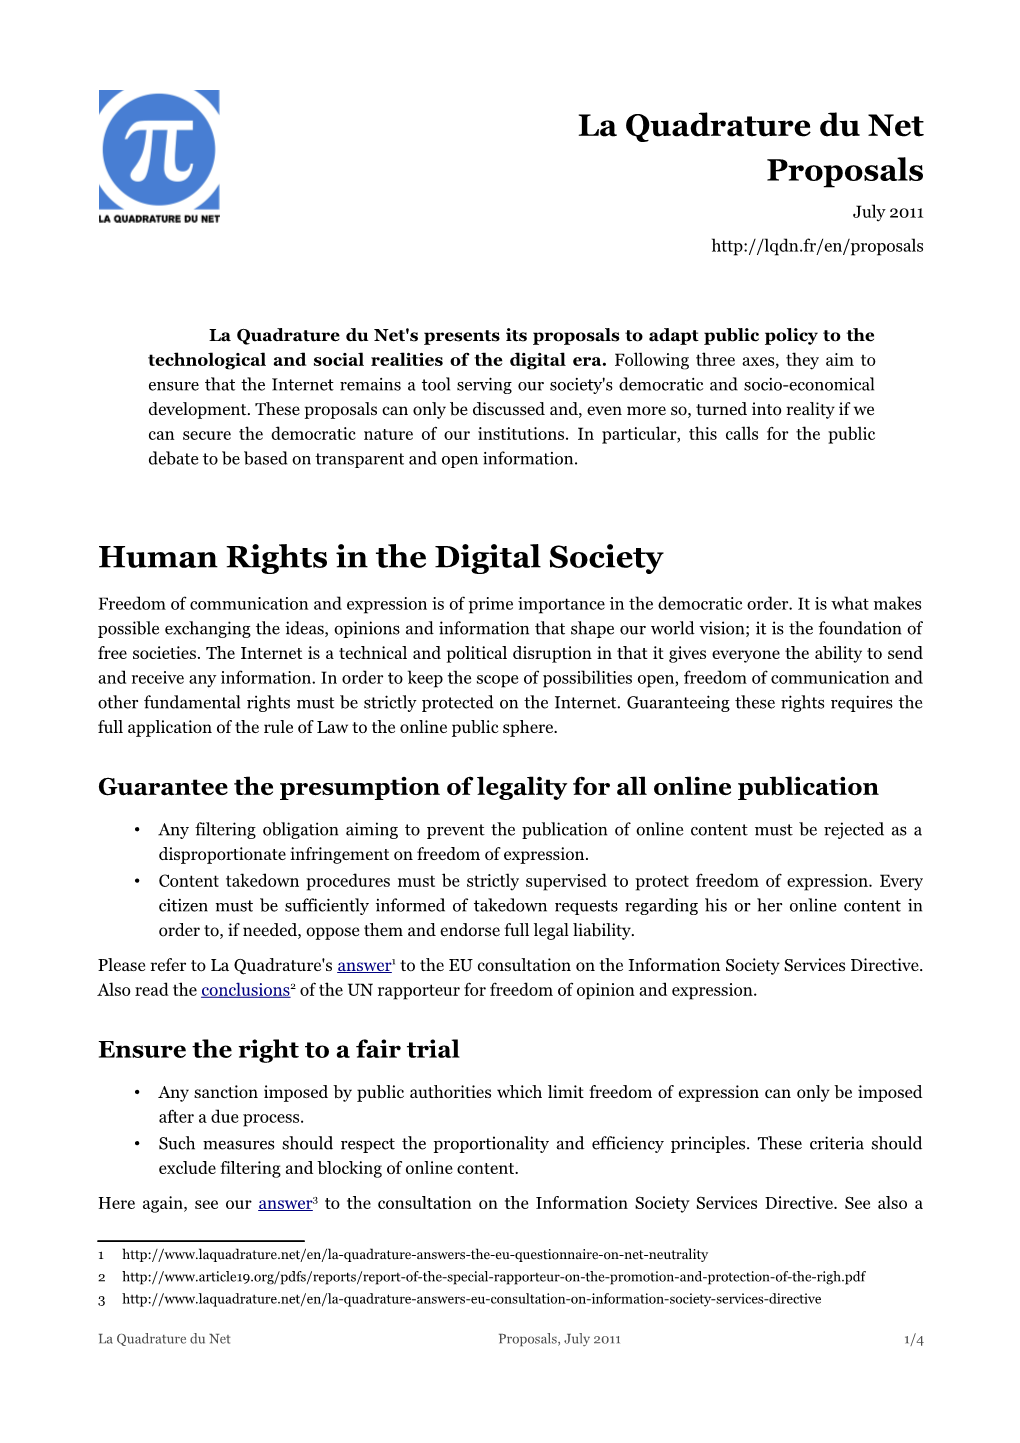 La Quadrature Du Net Proposals Human Rights in the Digital Society